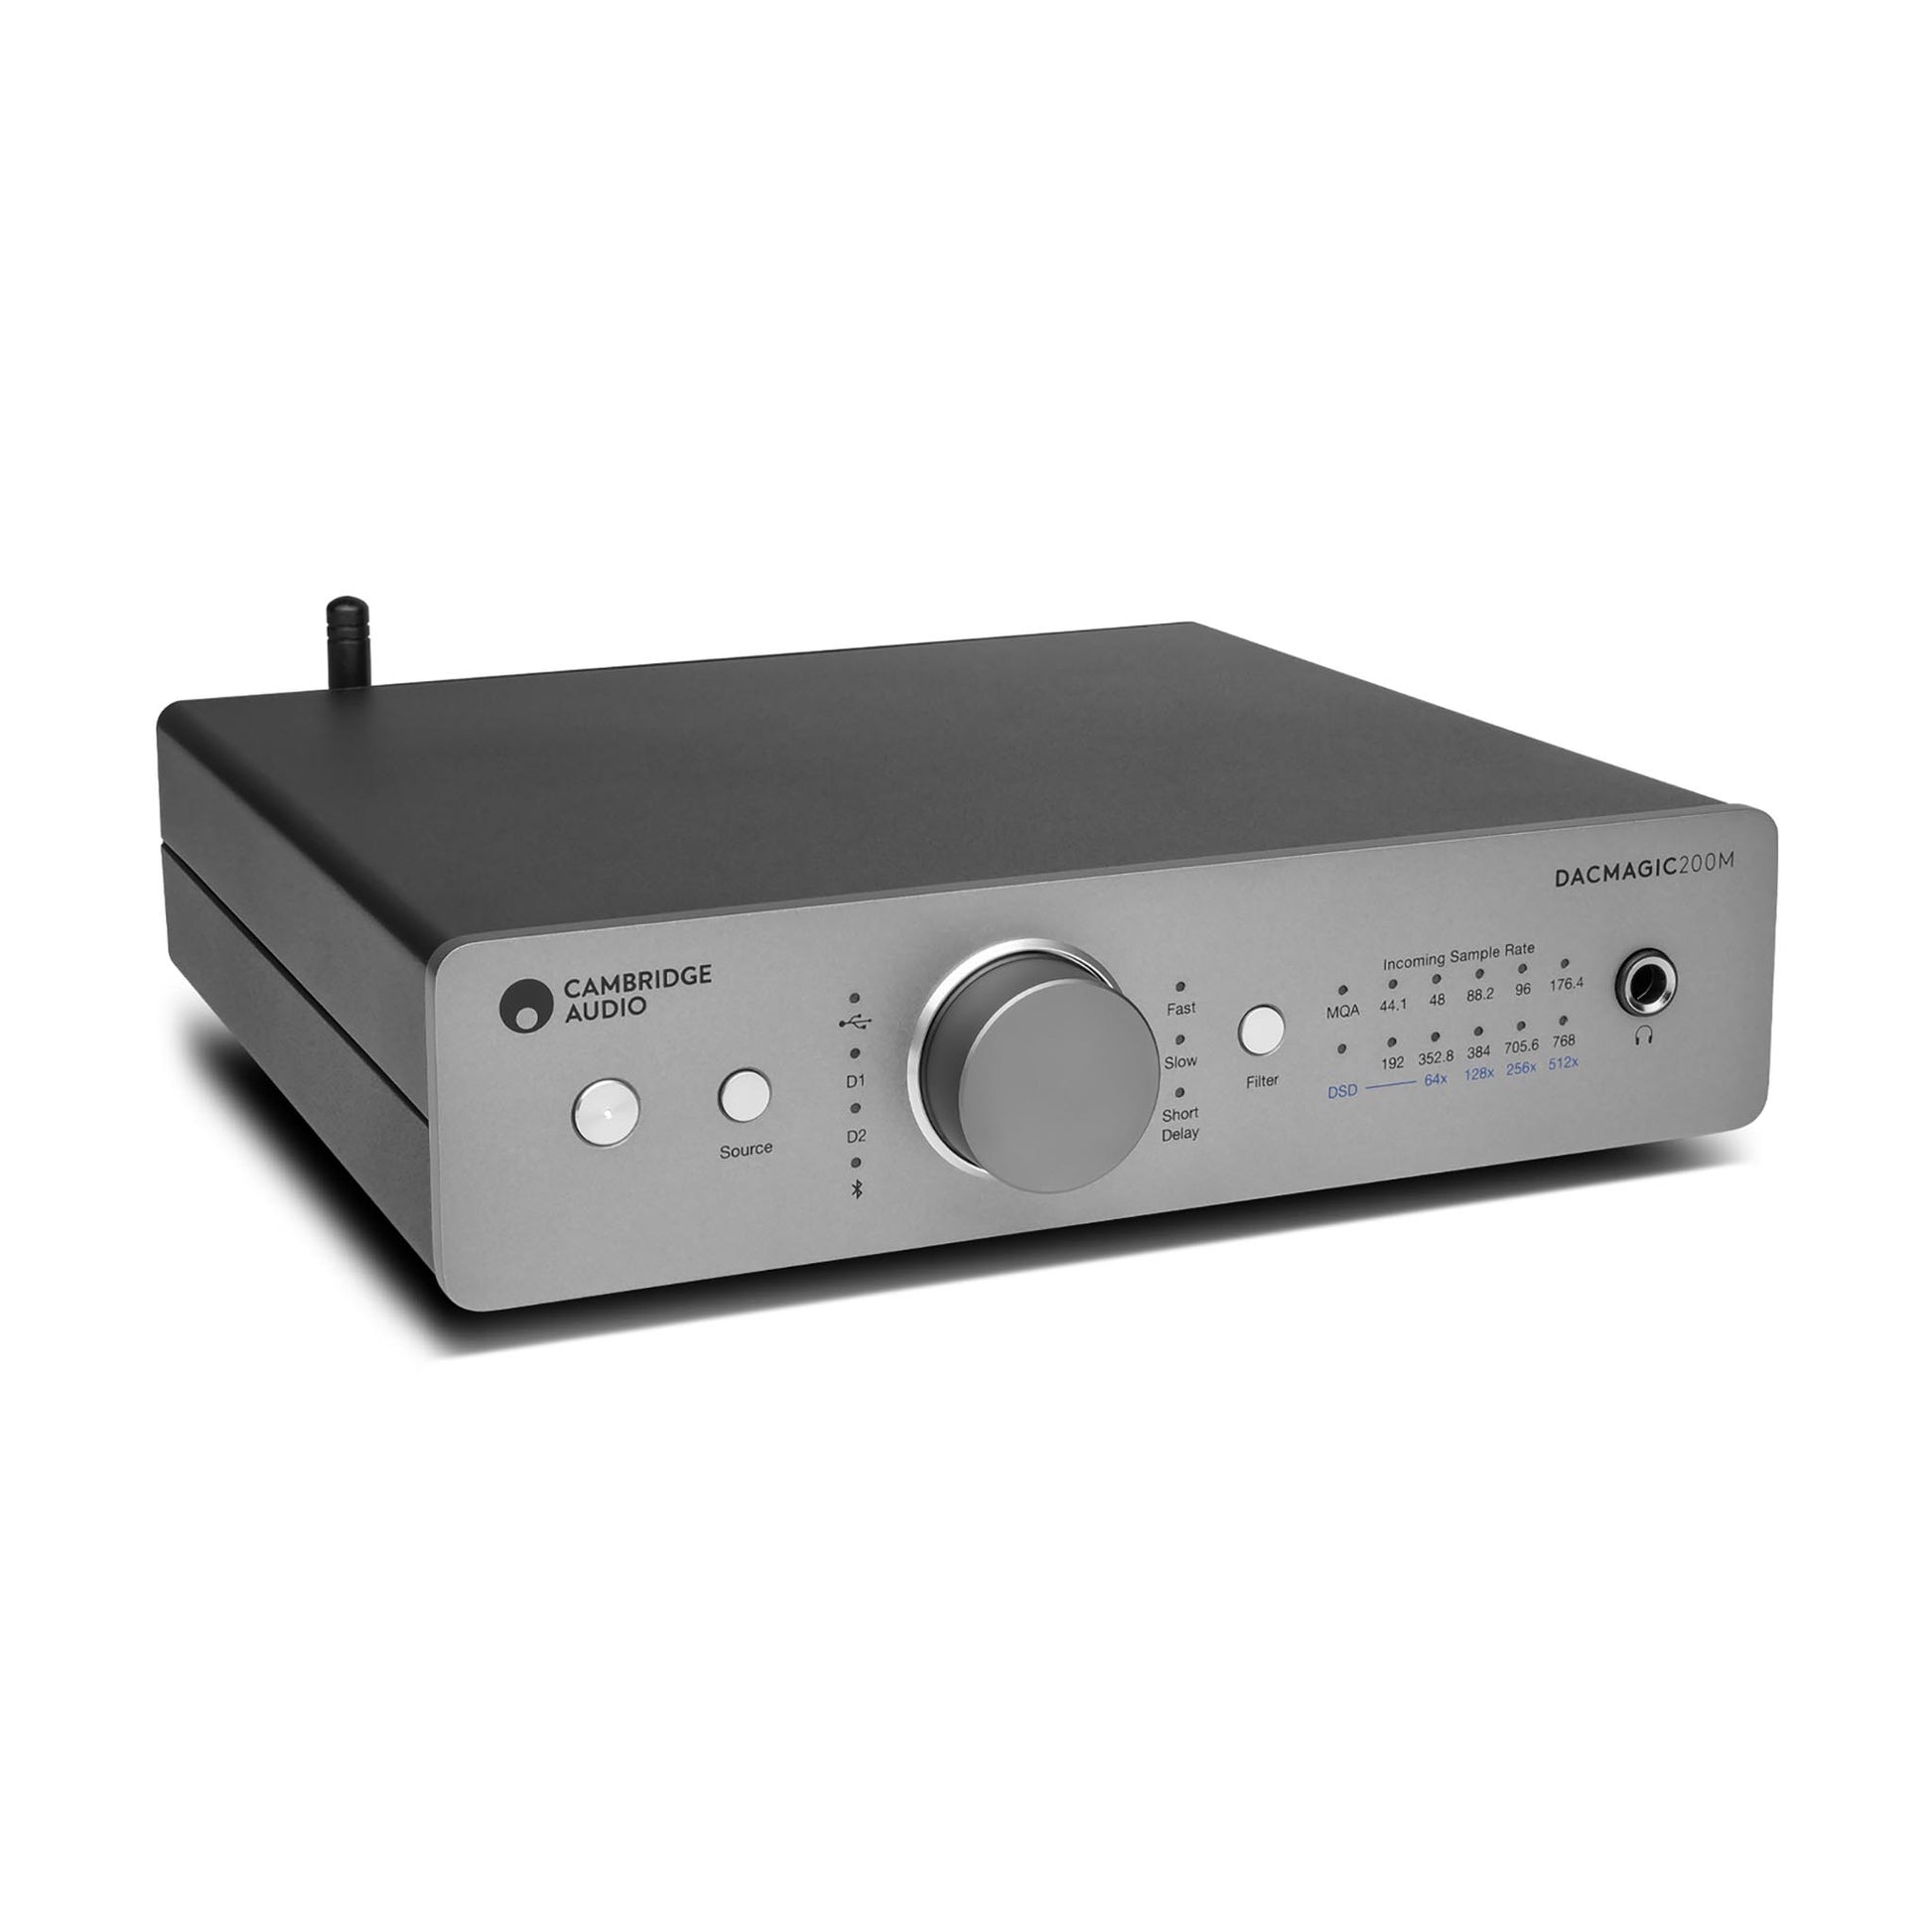 Cambridge Audio DacMagic 200M DAC / Preamp / Headphone Amplifier